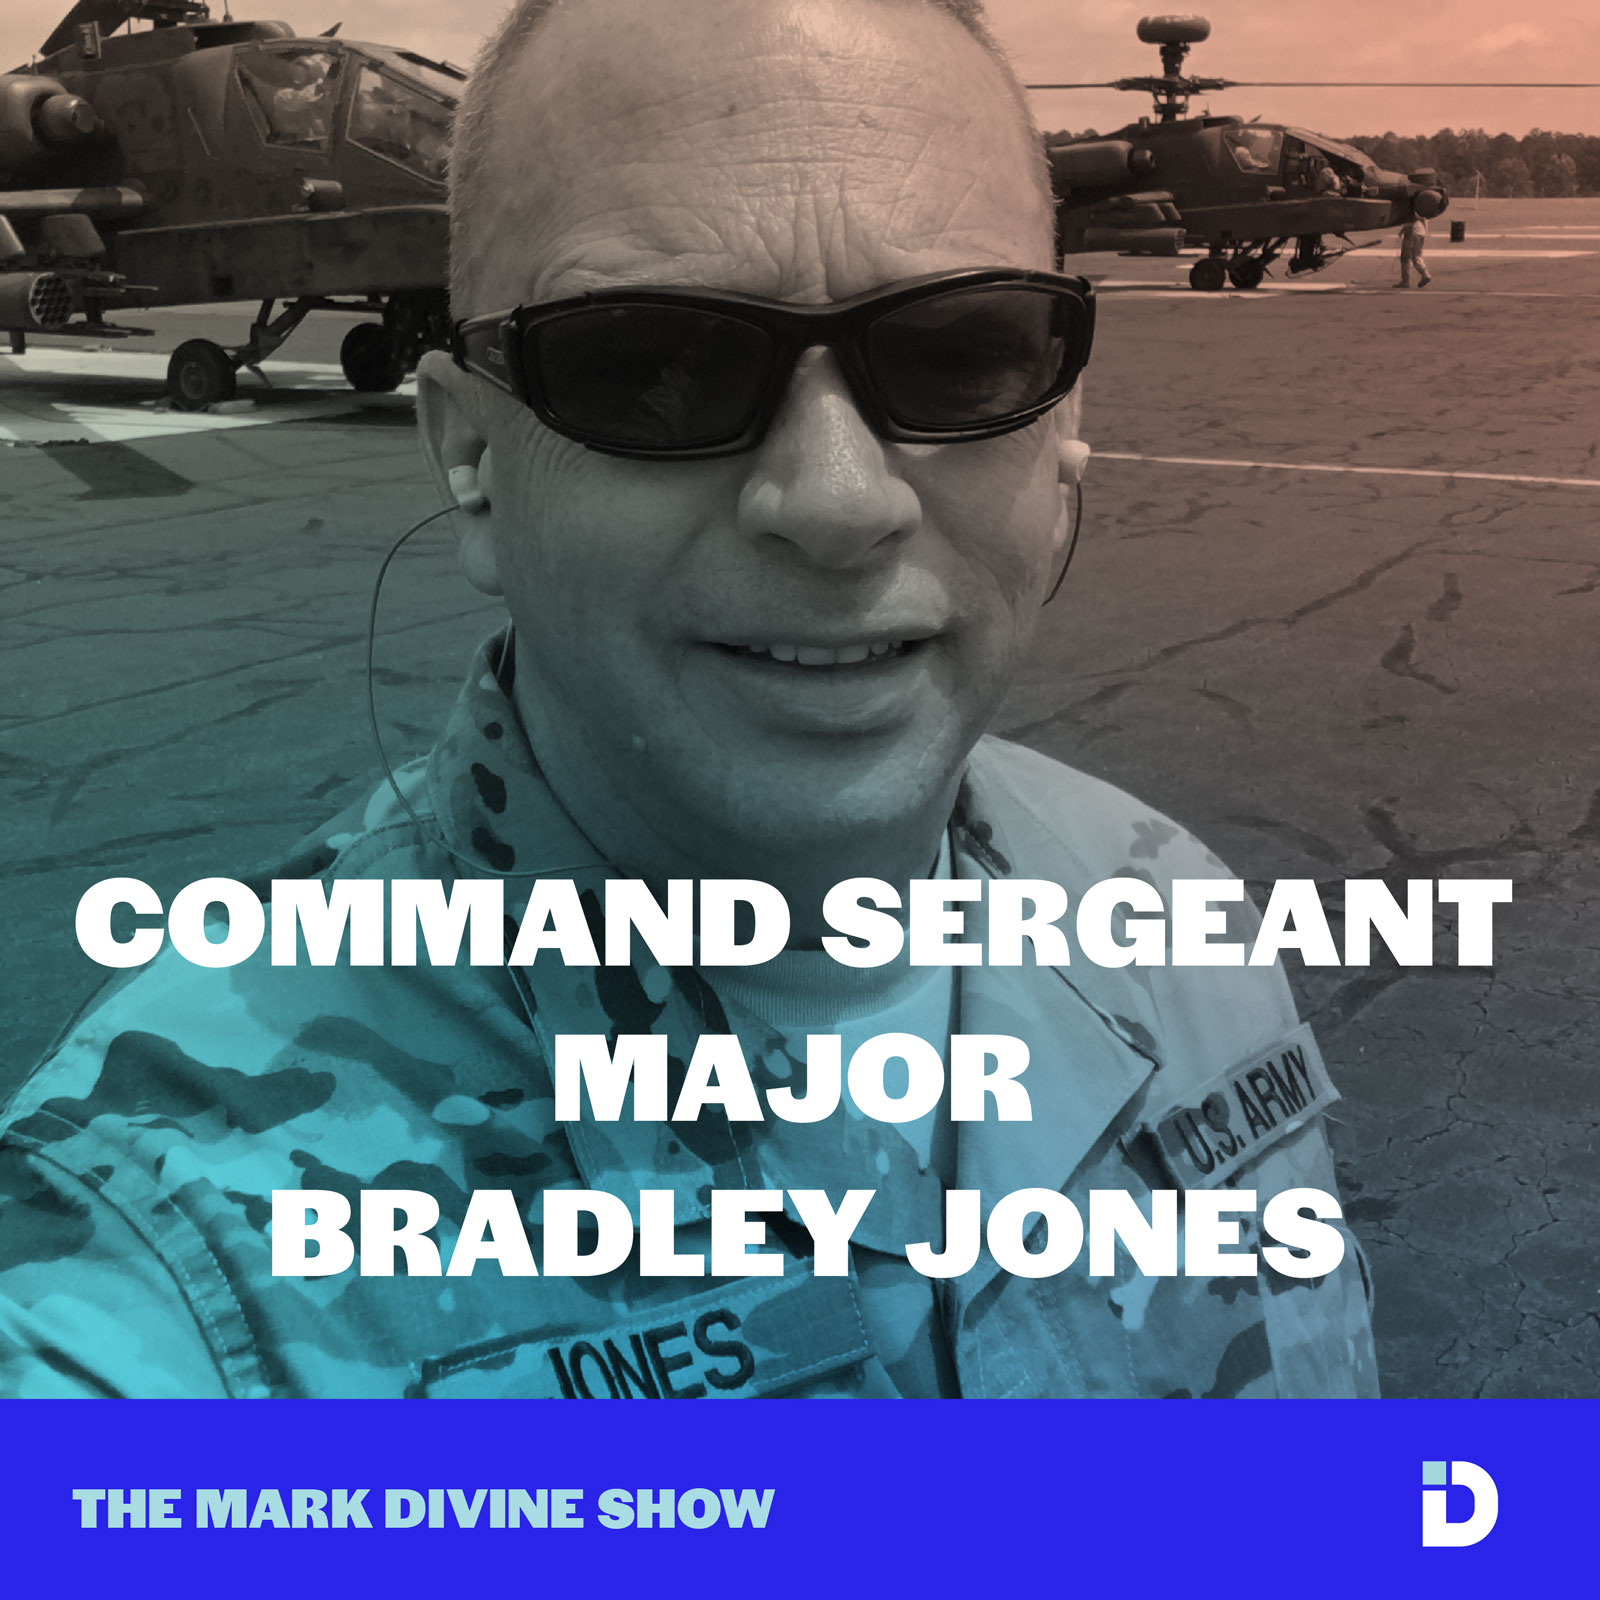 Major Bradley Jones